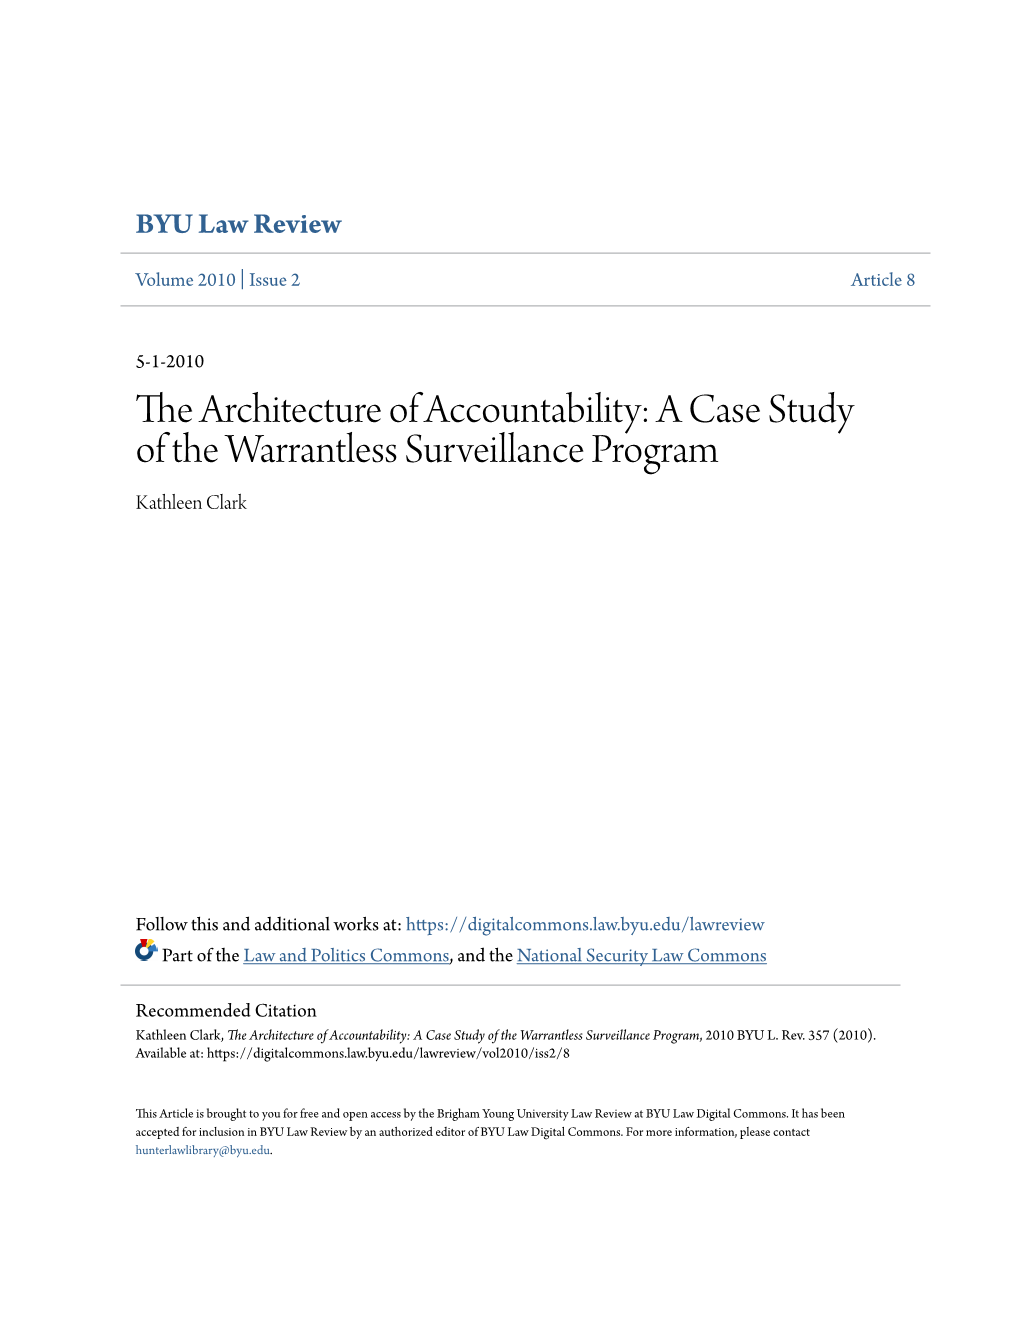 A Case Study of the Warrantless Surveillance Program Kathleen Clark